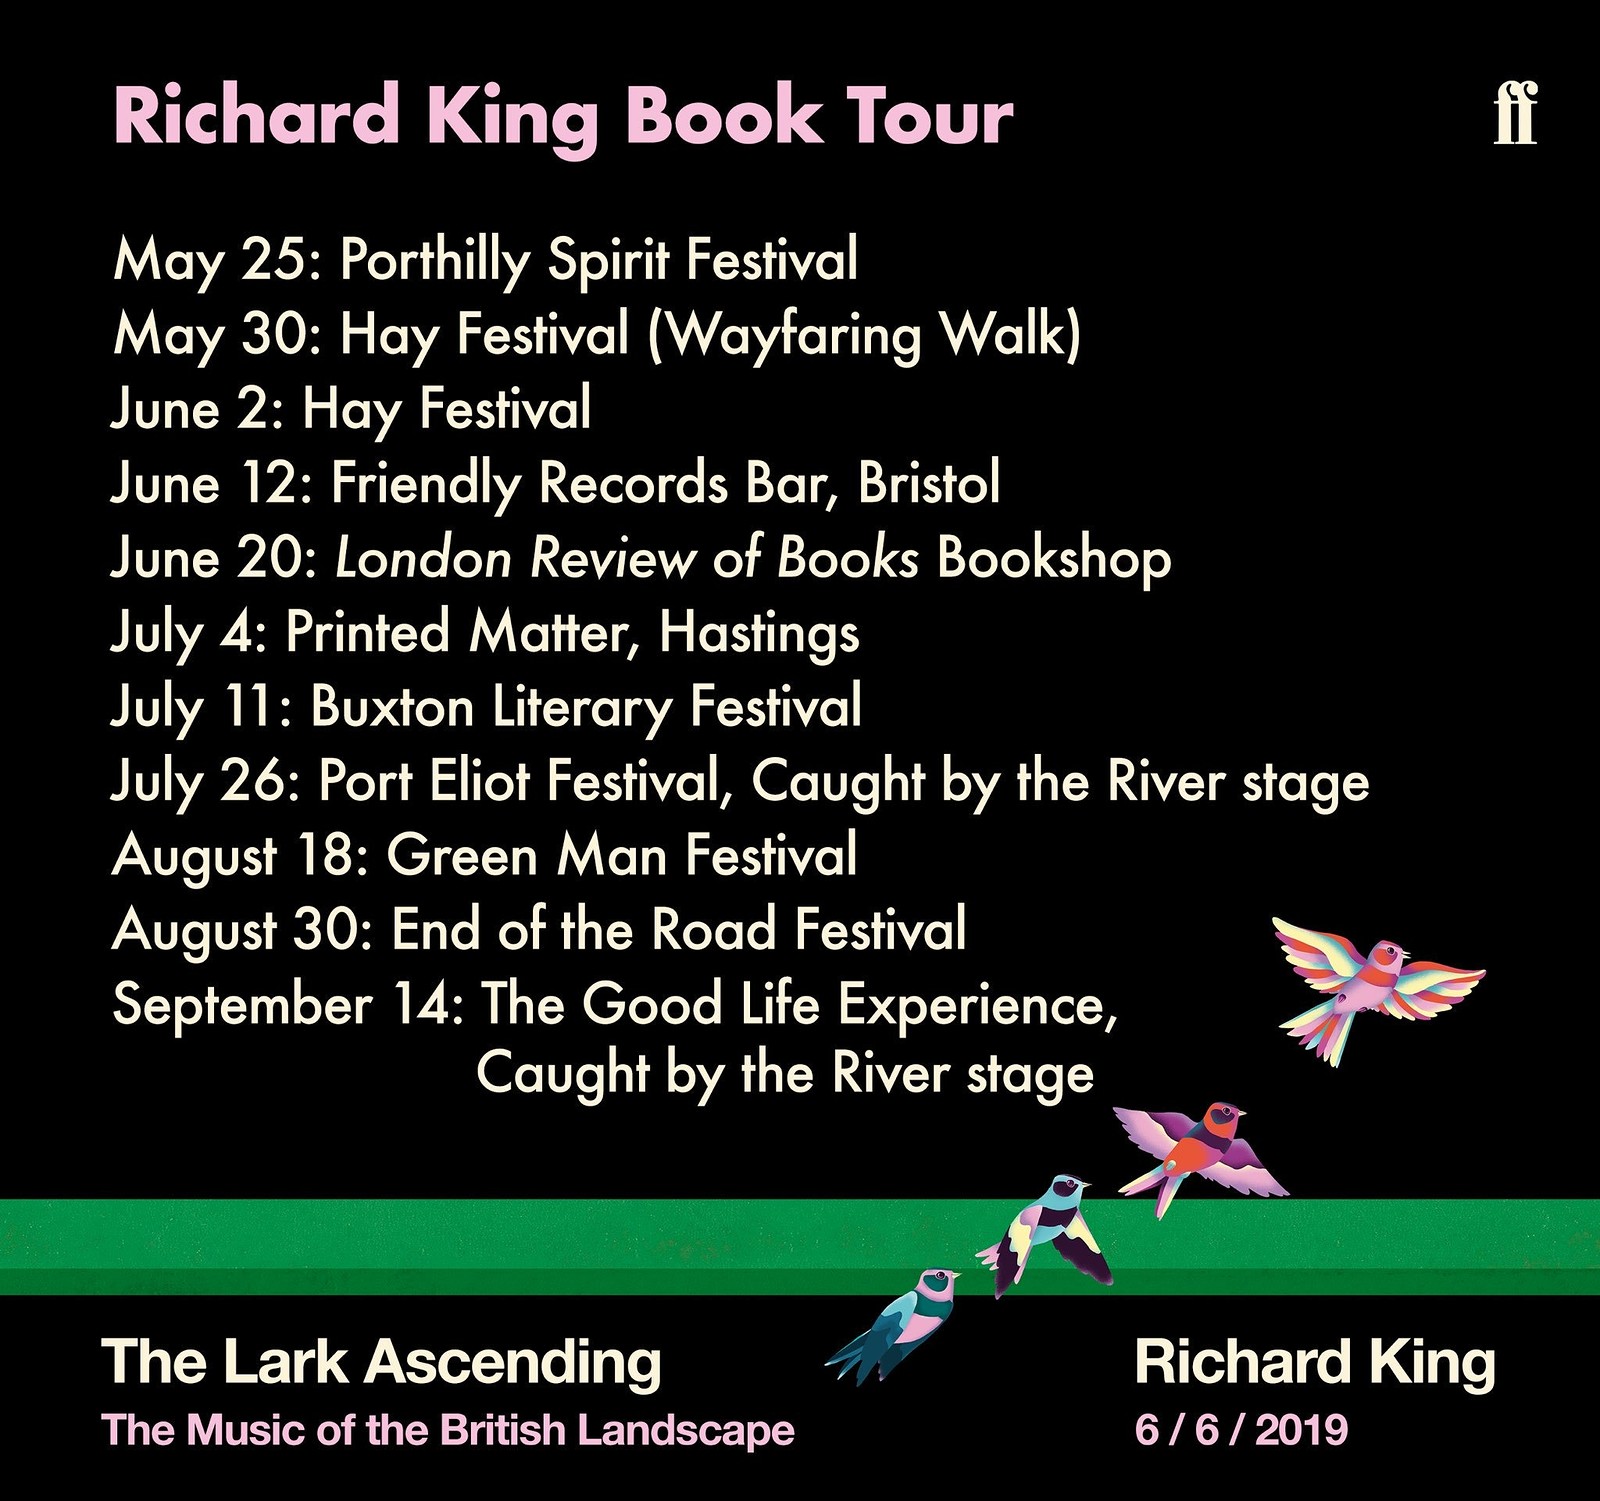 Richard King Book Tour: The Lark Ascending at Friendly Records Bar